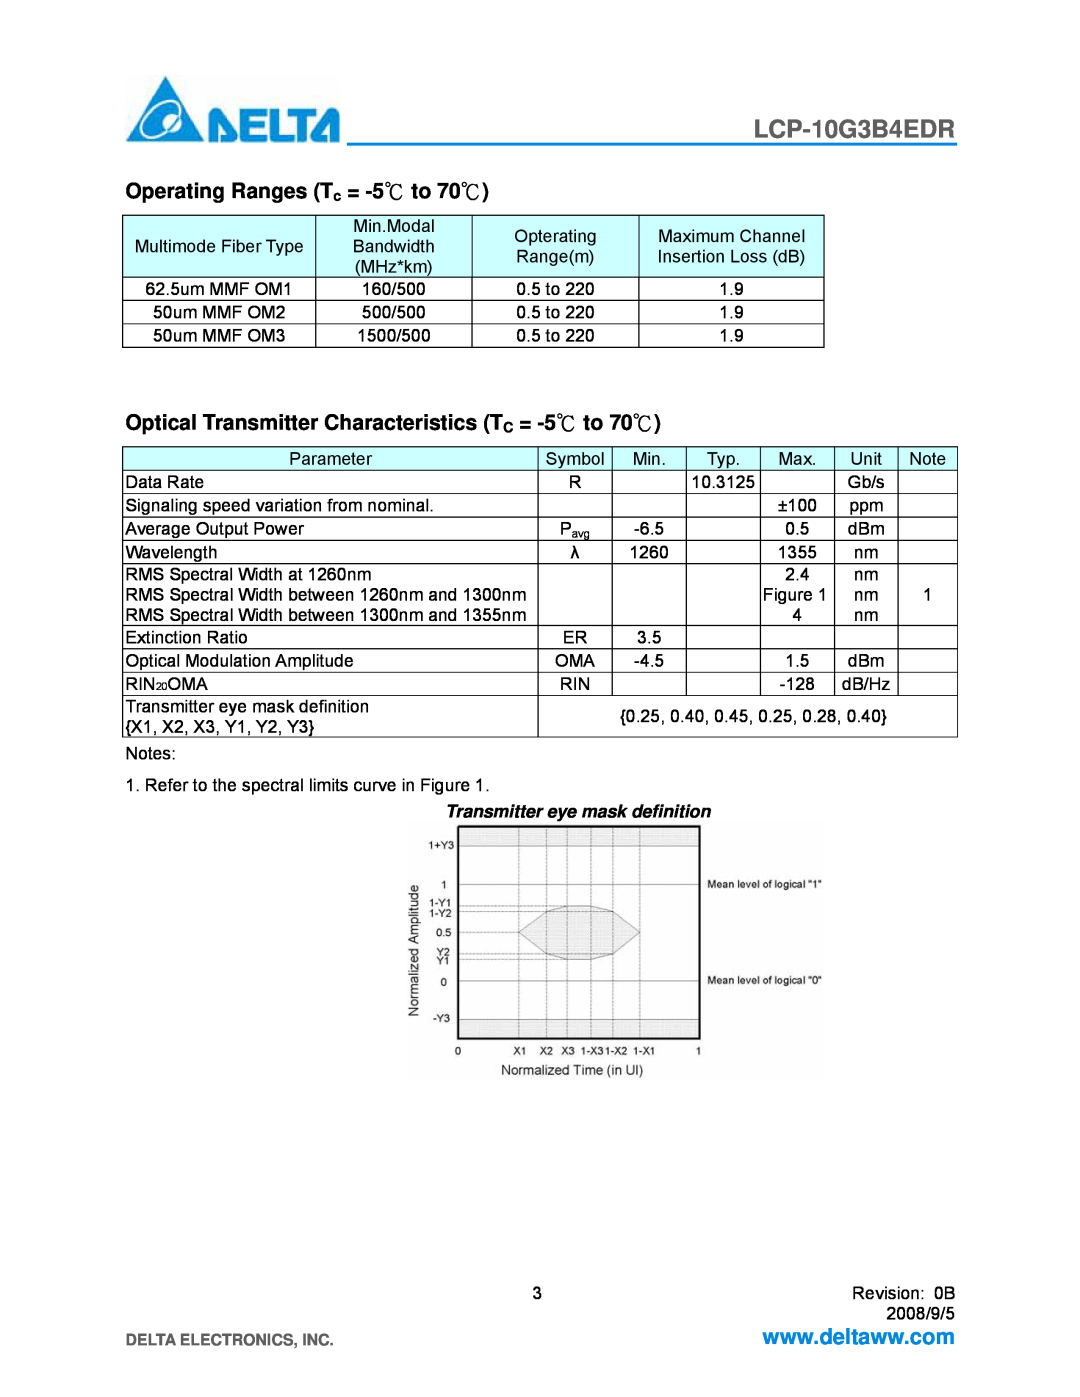 Delta Electronics LCP-10G3B4EDR manual Operating Ranges Tc = -5 to, Optical Transmitter Characteristics TC = -5 to 